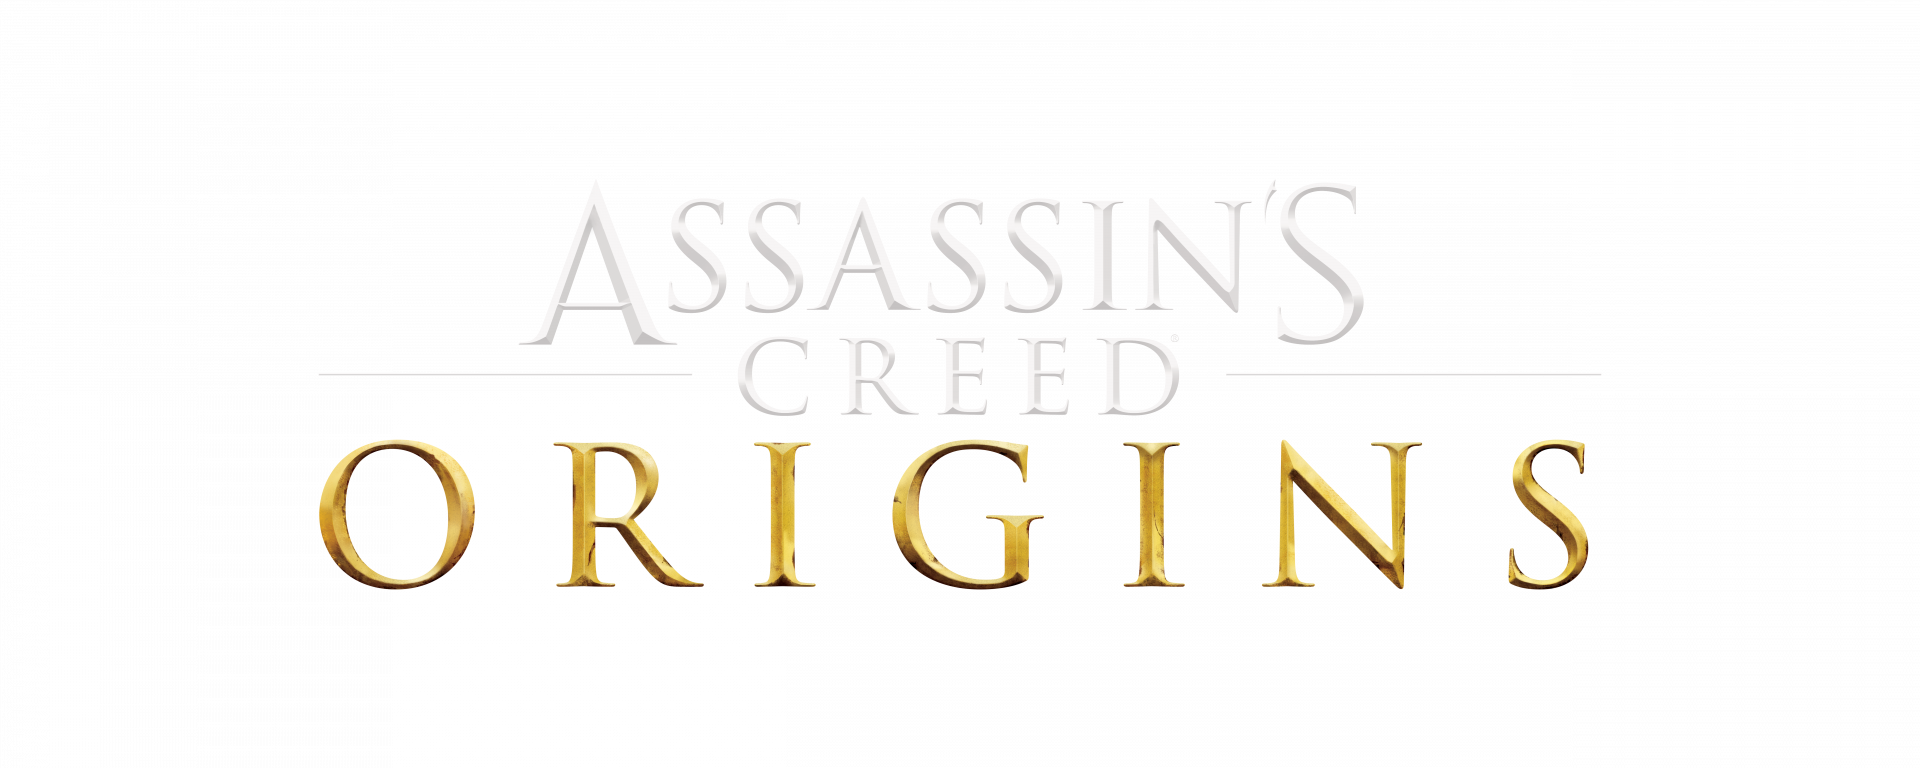 Assassins Creed Origins лого. Assassins Creed надпись. Ассасинс крил Истоки логотп. Ассасин Истоки надпись.